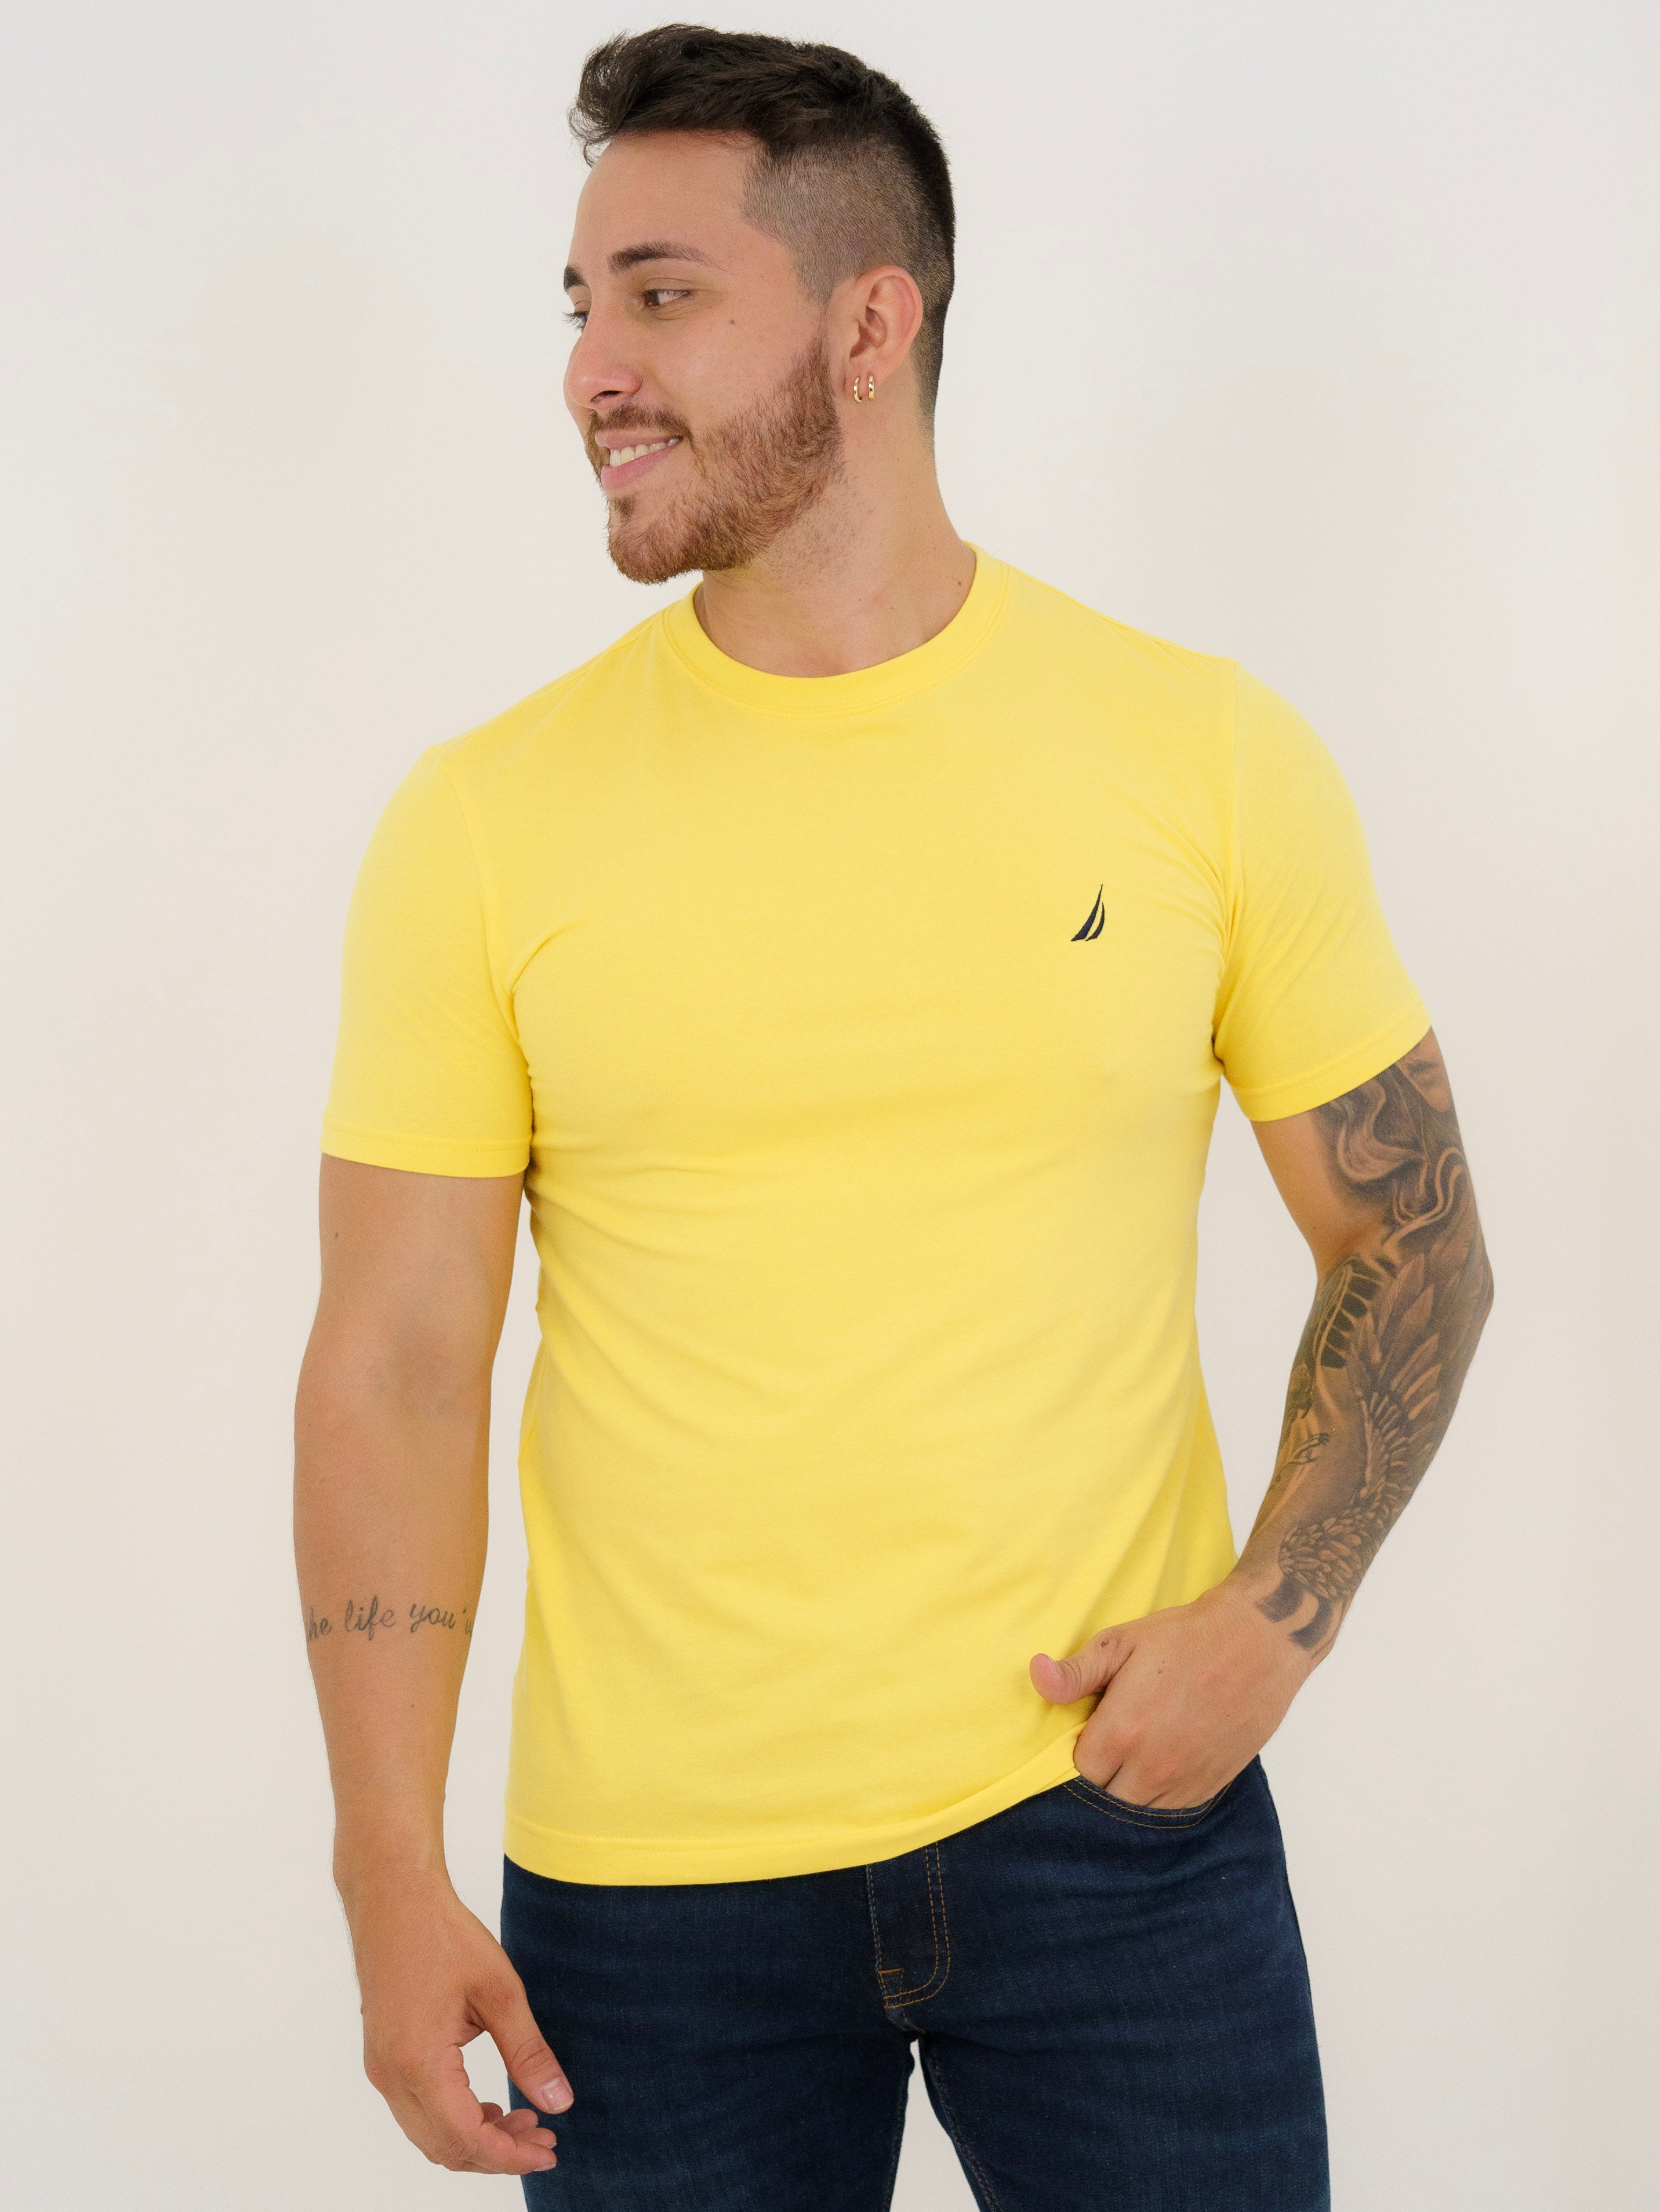 Camiseta Nautica Yellow